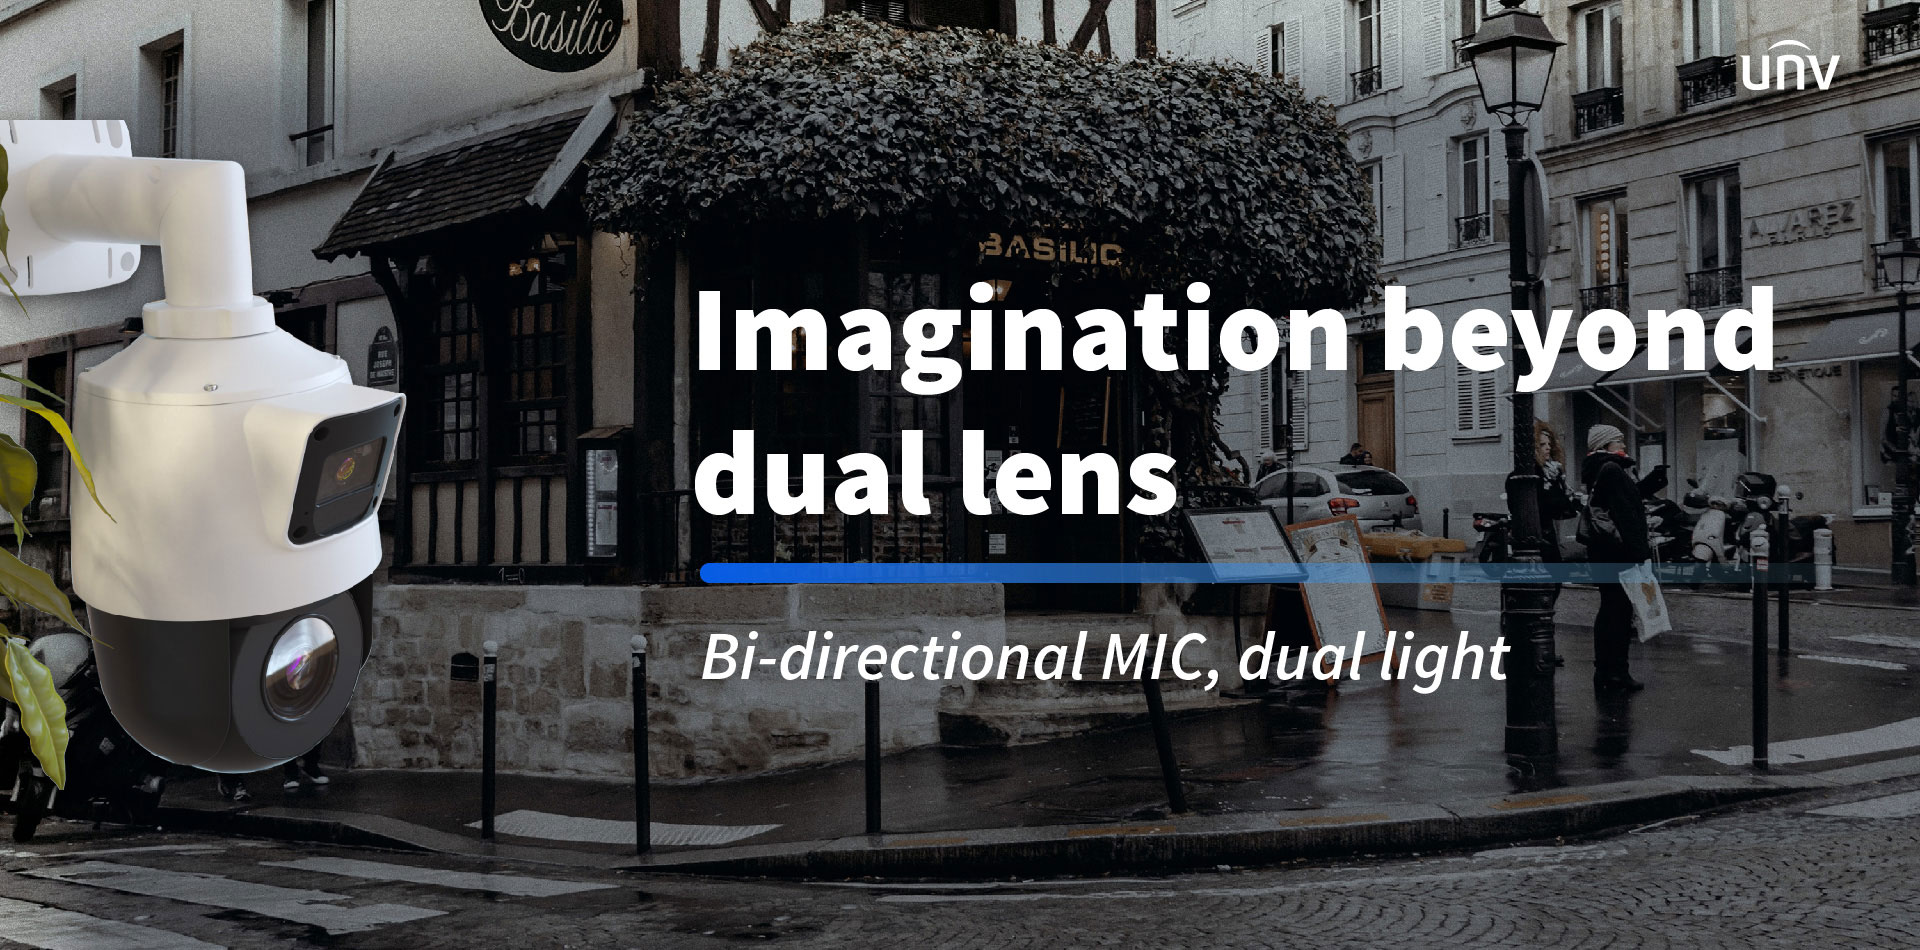 Dual lens